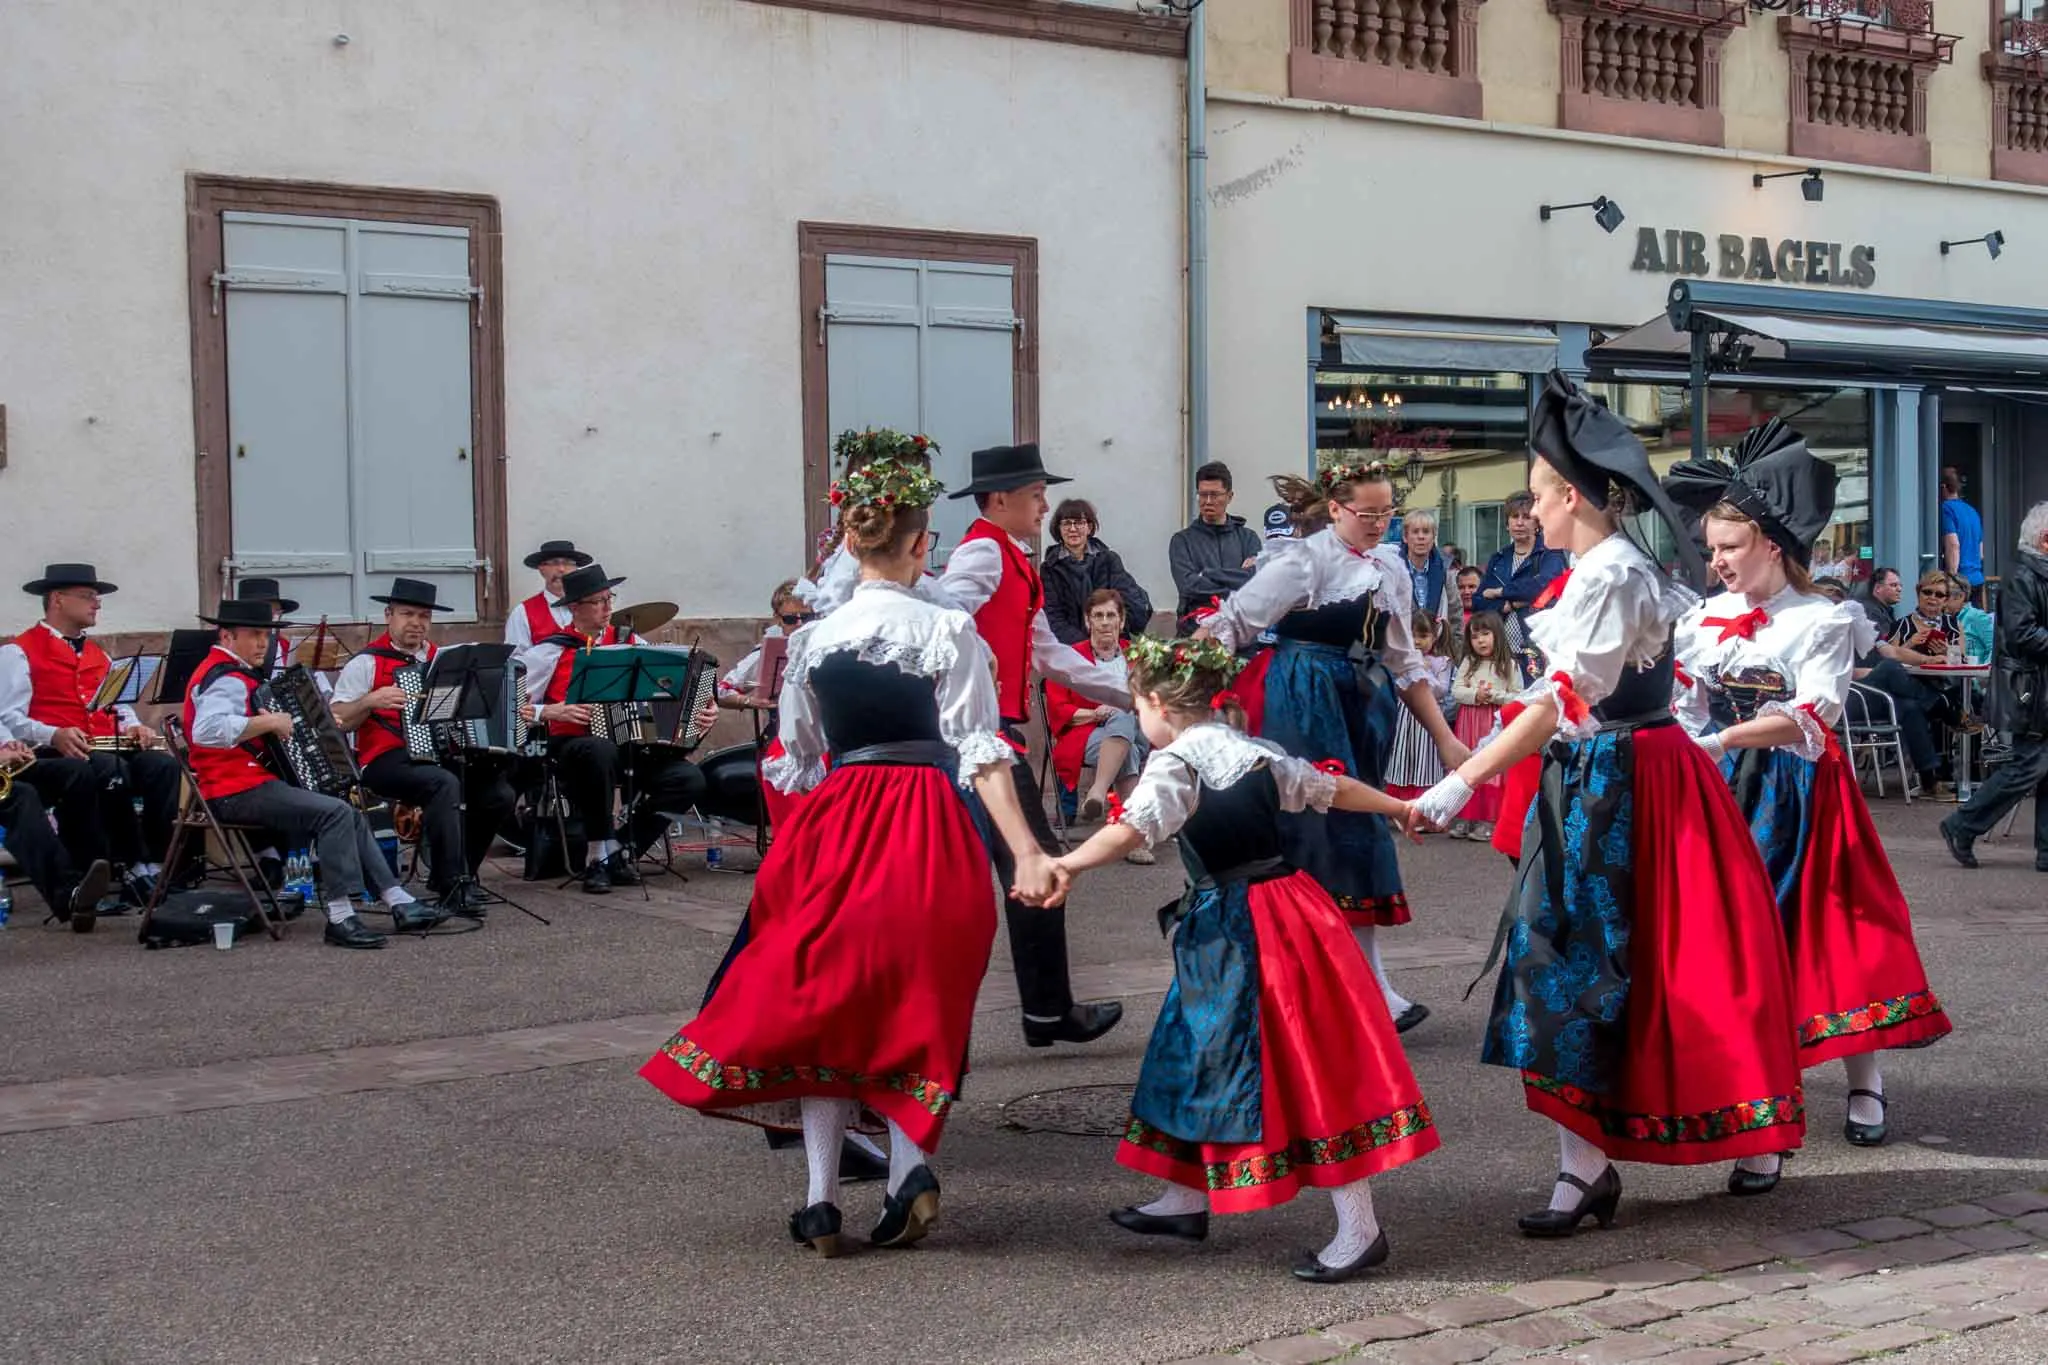 People dancing in traditional Alsatian clothing.